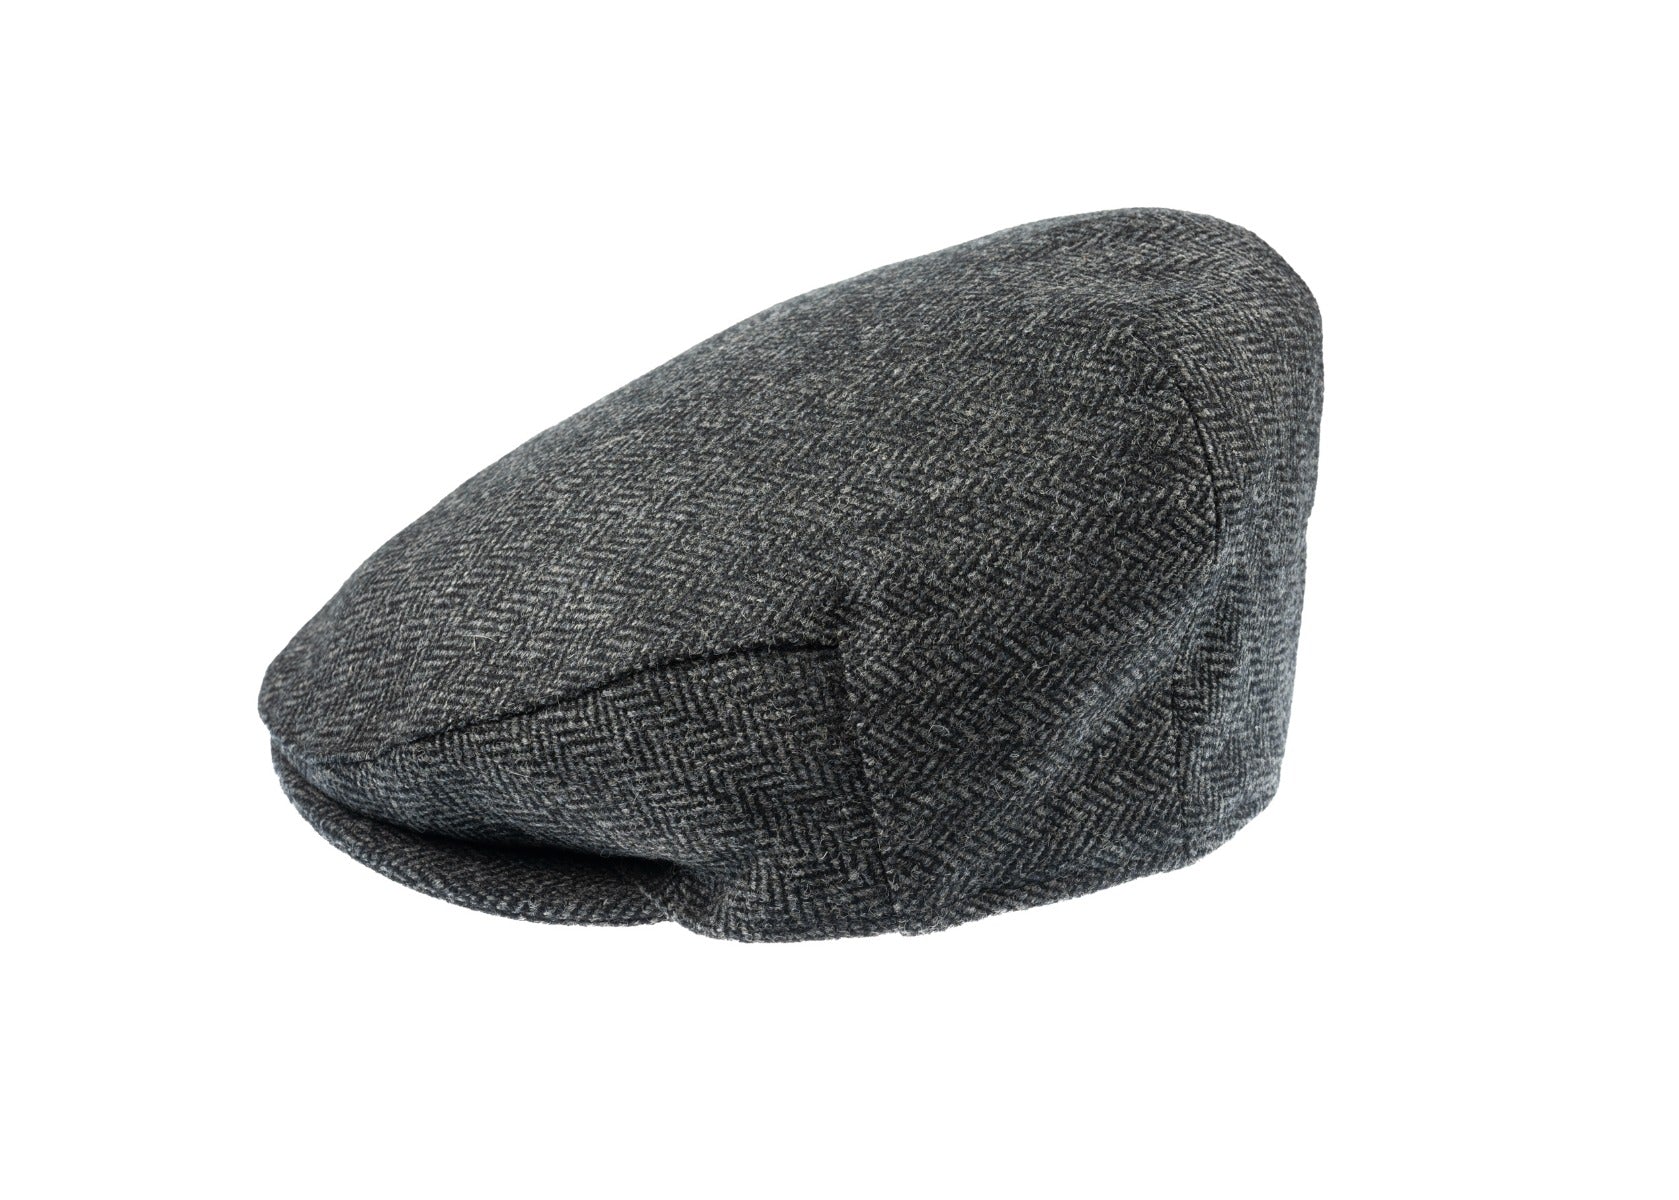 Balmoral Tweed Flat Cap in Z537